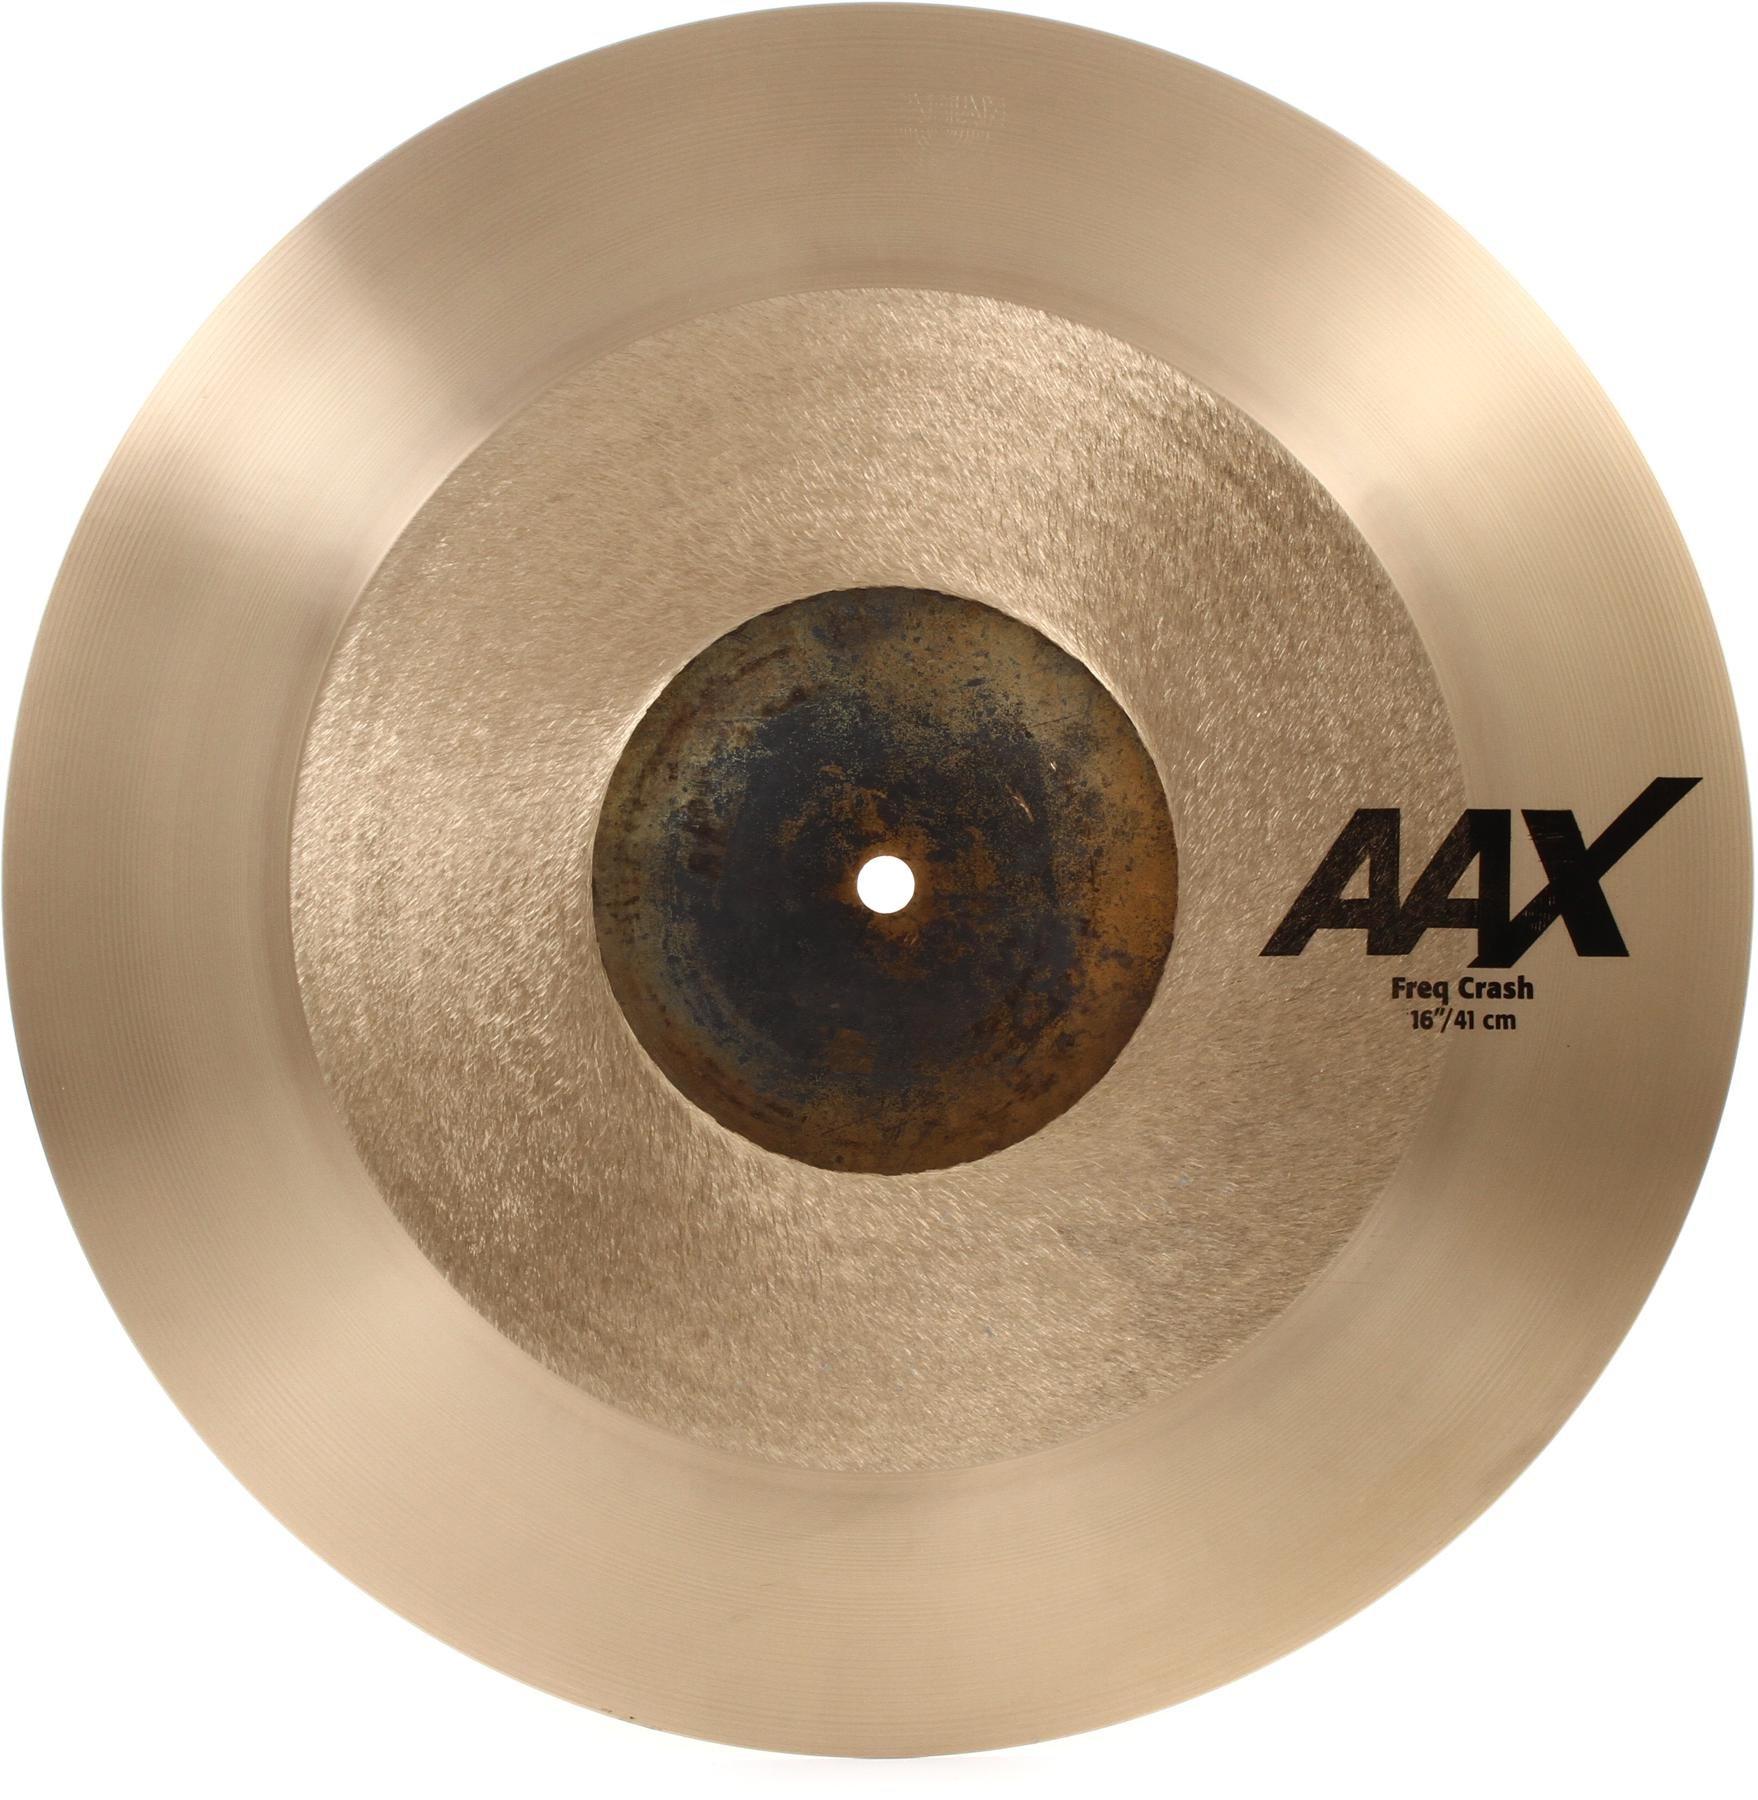 Sabian 16 inch AAX Freq Crash Cymbal | Sweetwater